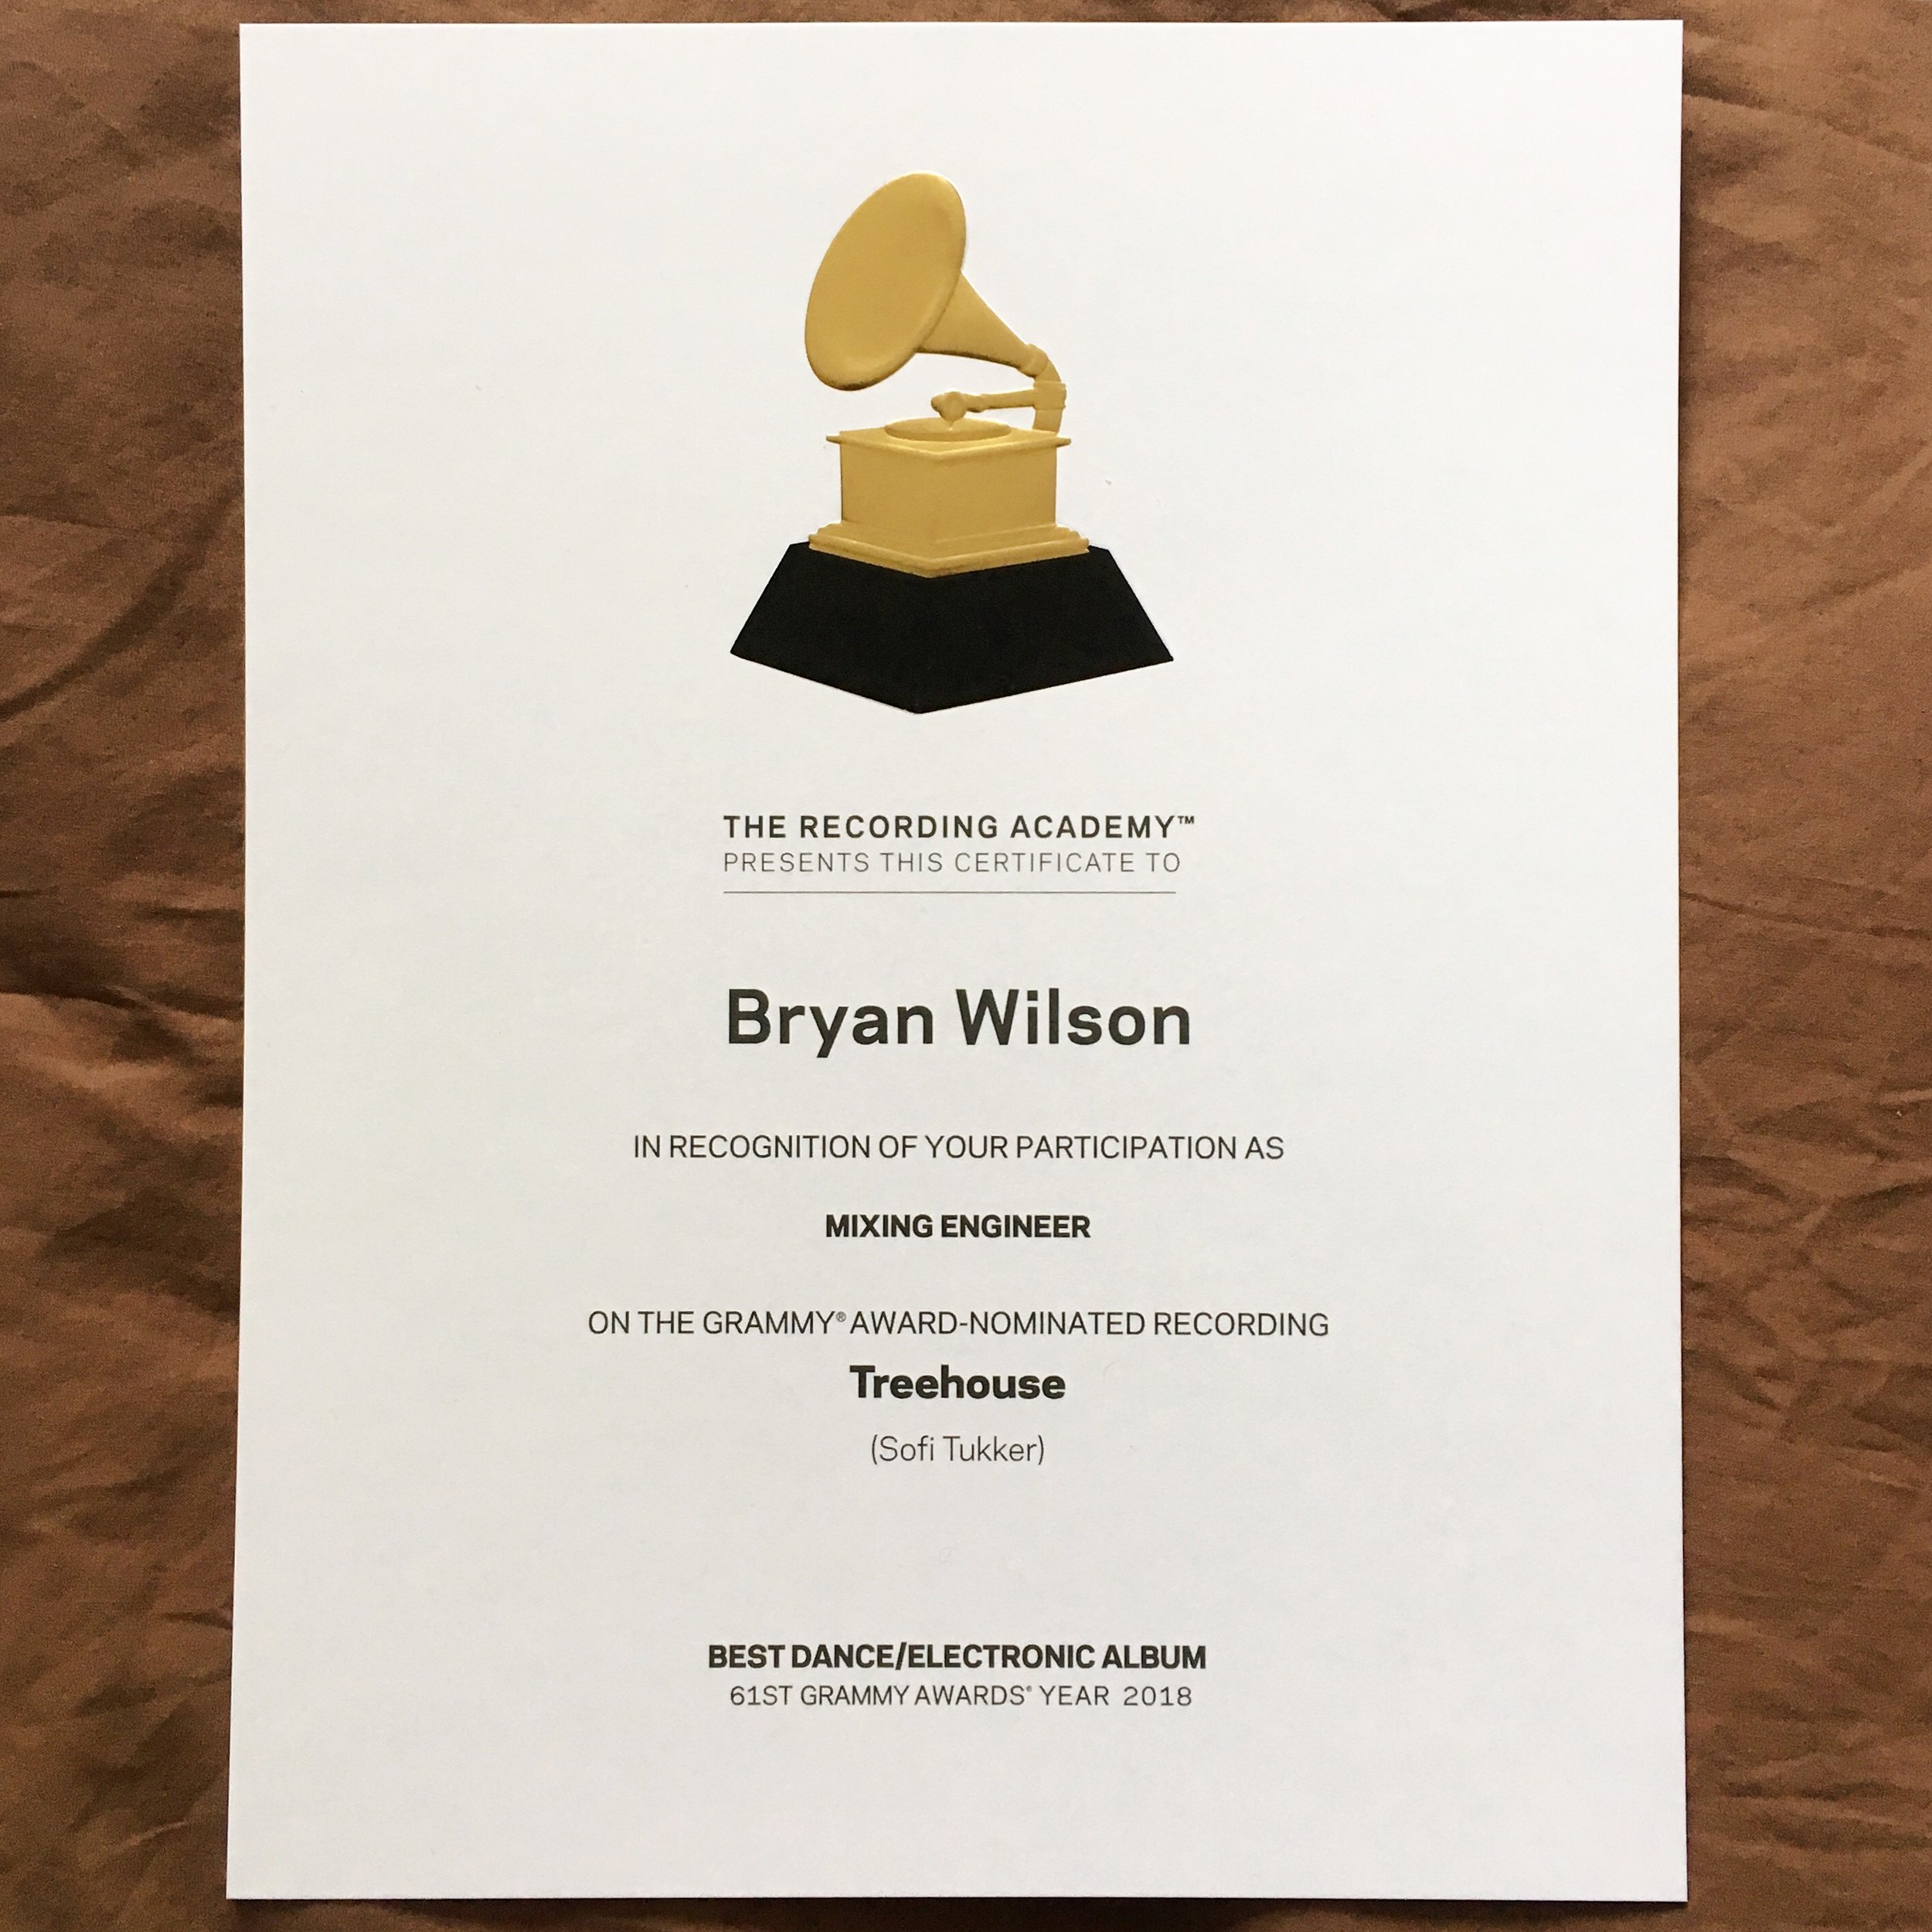 Bryan Wilson Treehouse Grammy Awards